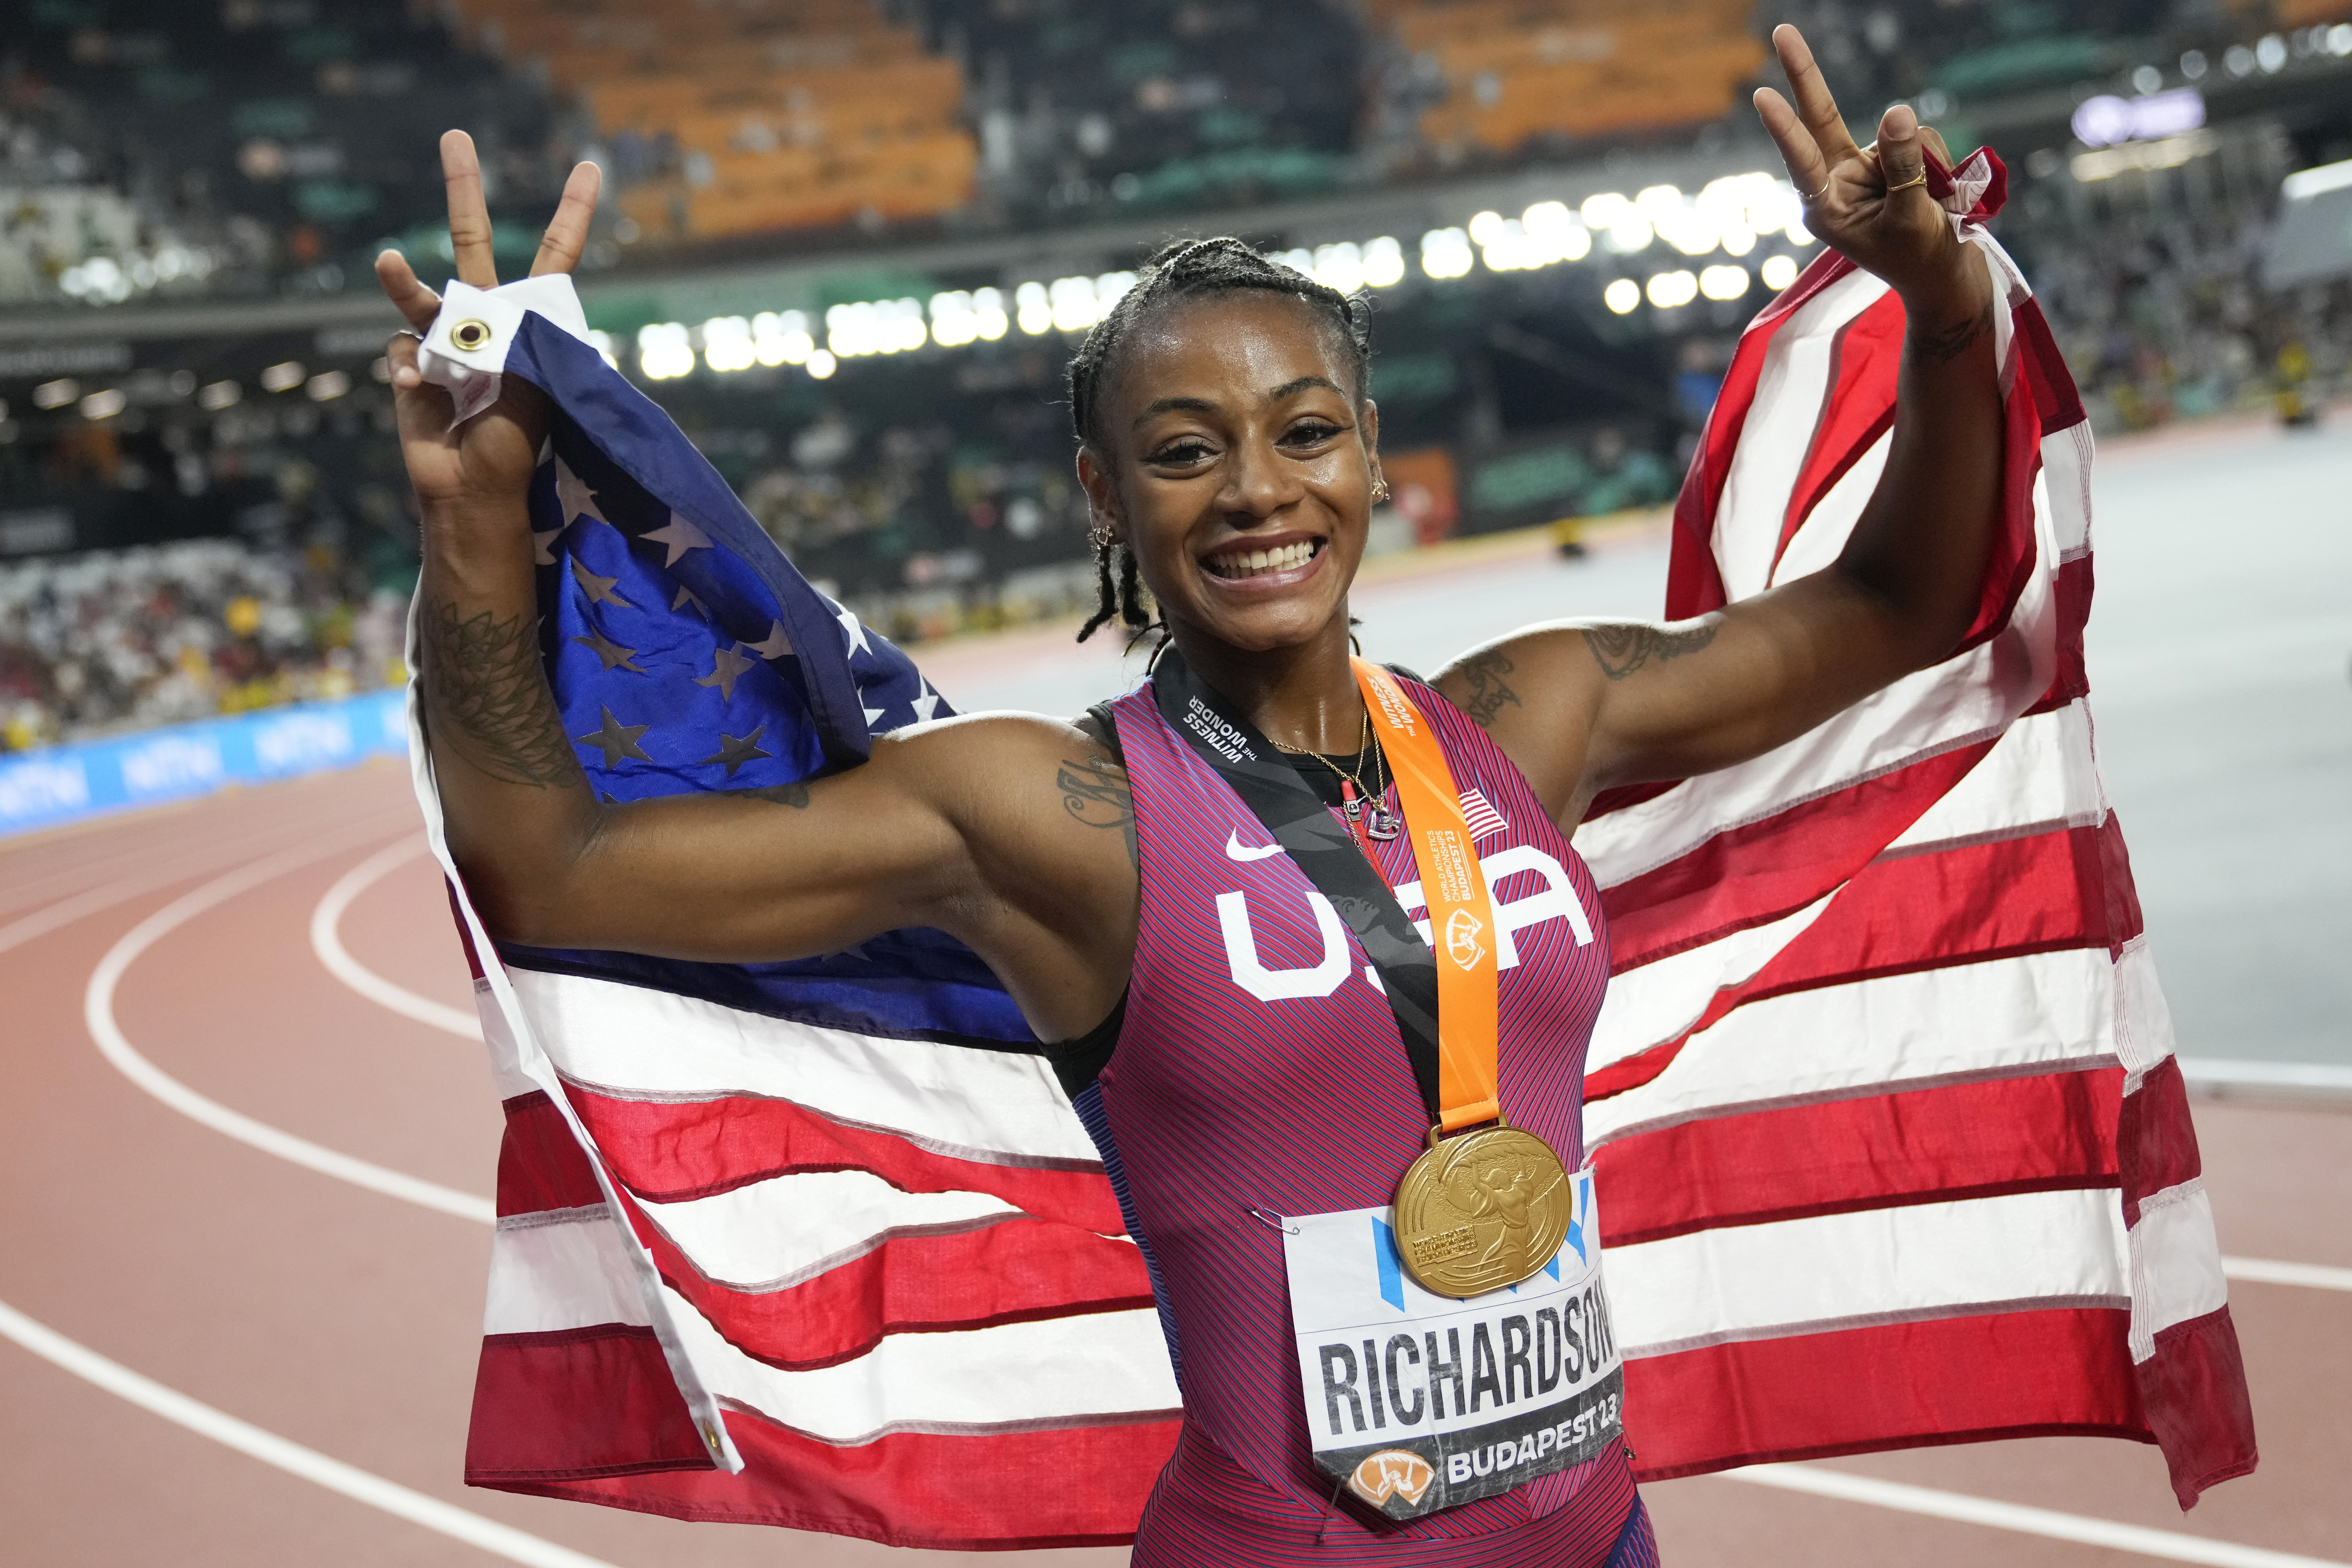 U.S. Women's Athlete Of The Year — Sha'Carri Richardson - Track & Field News